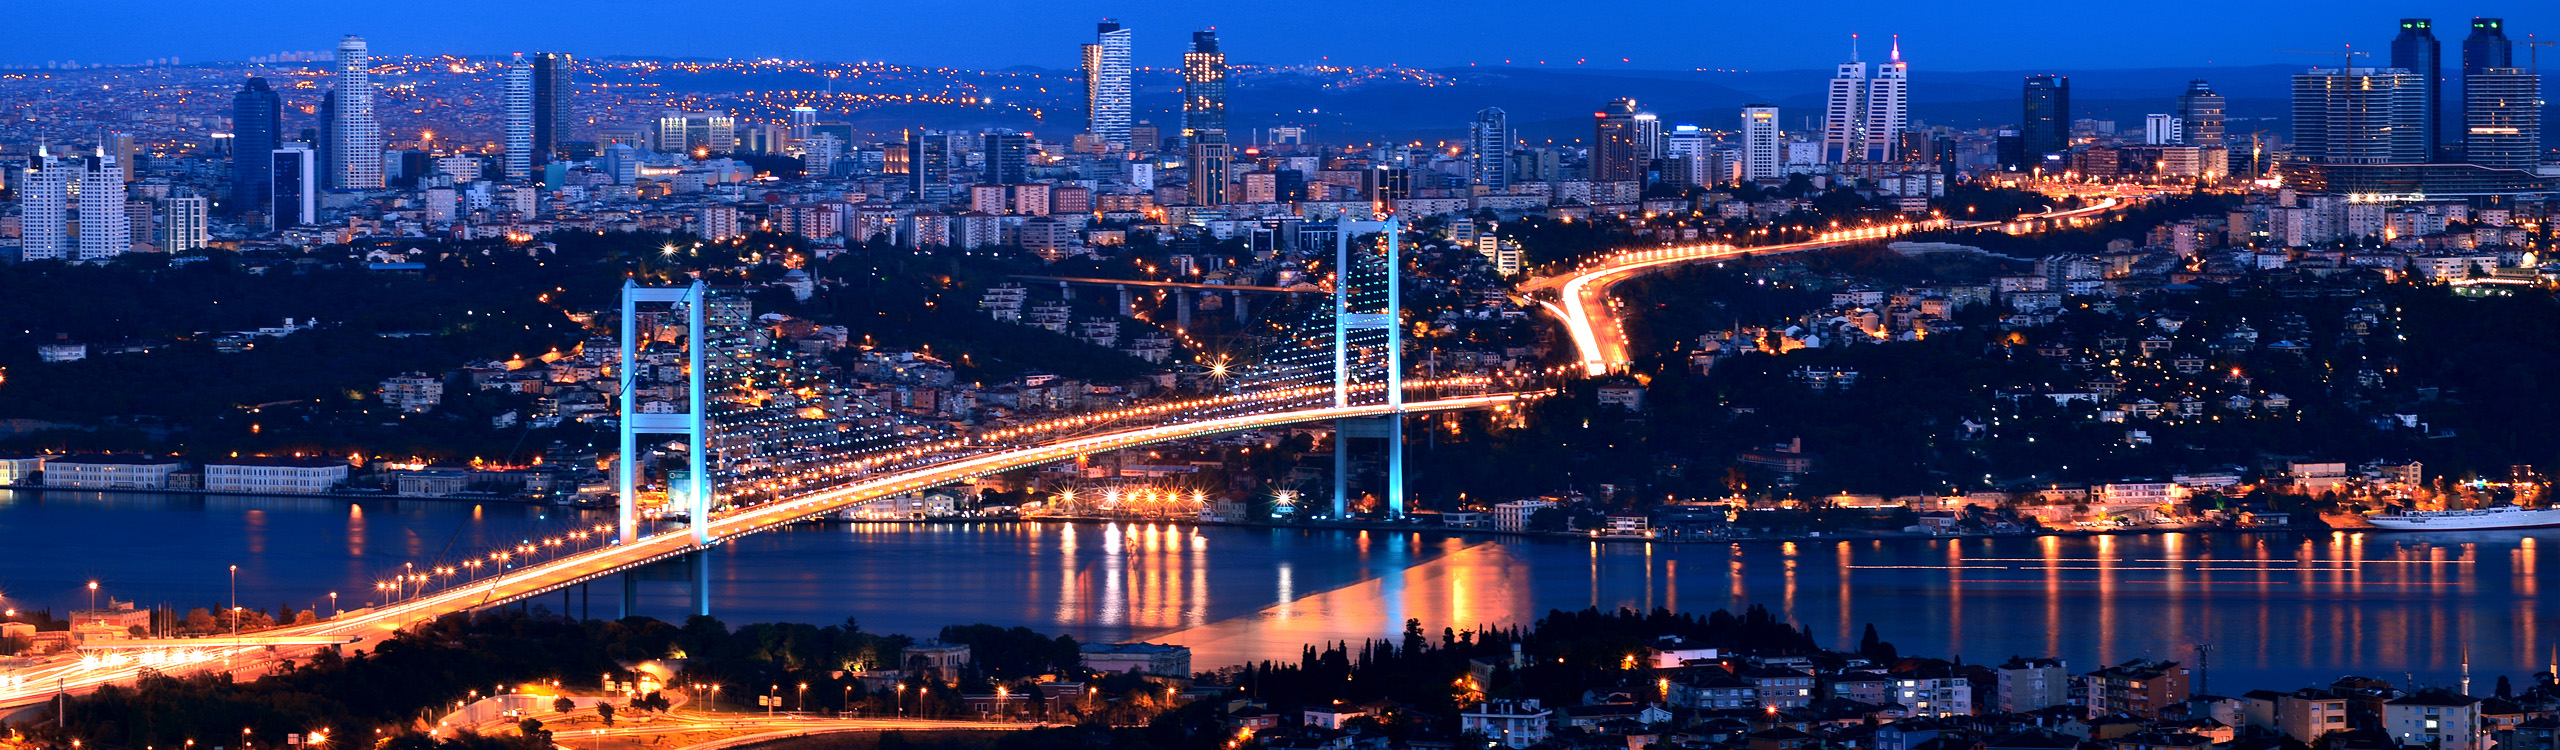 istanbul night city view